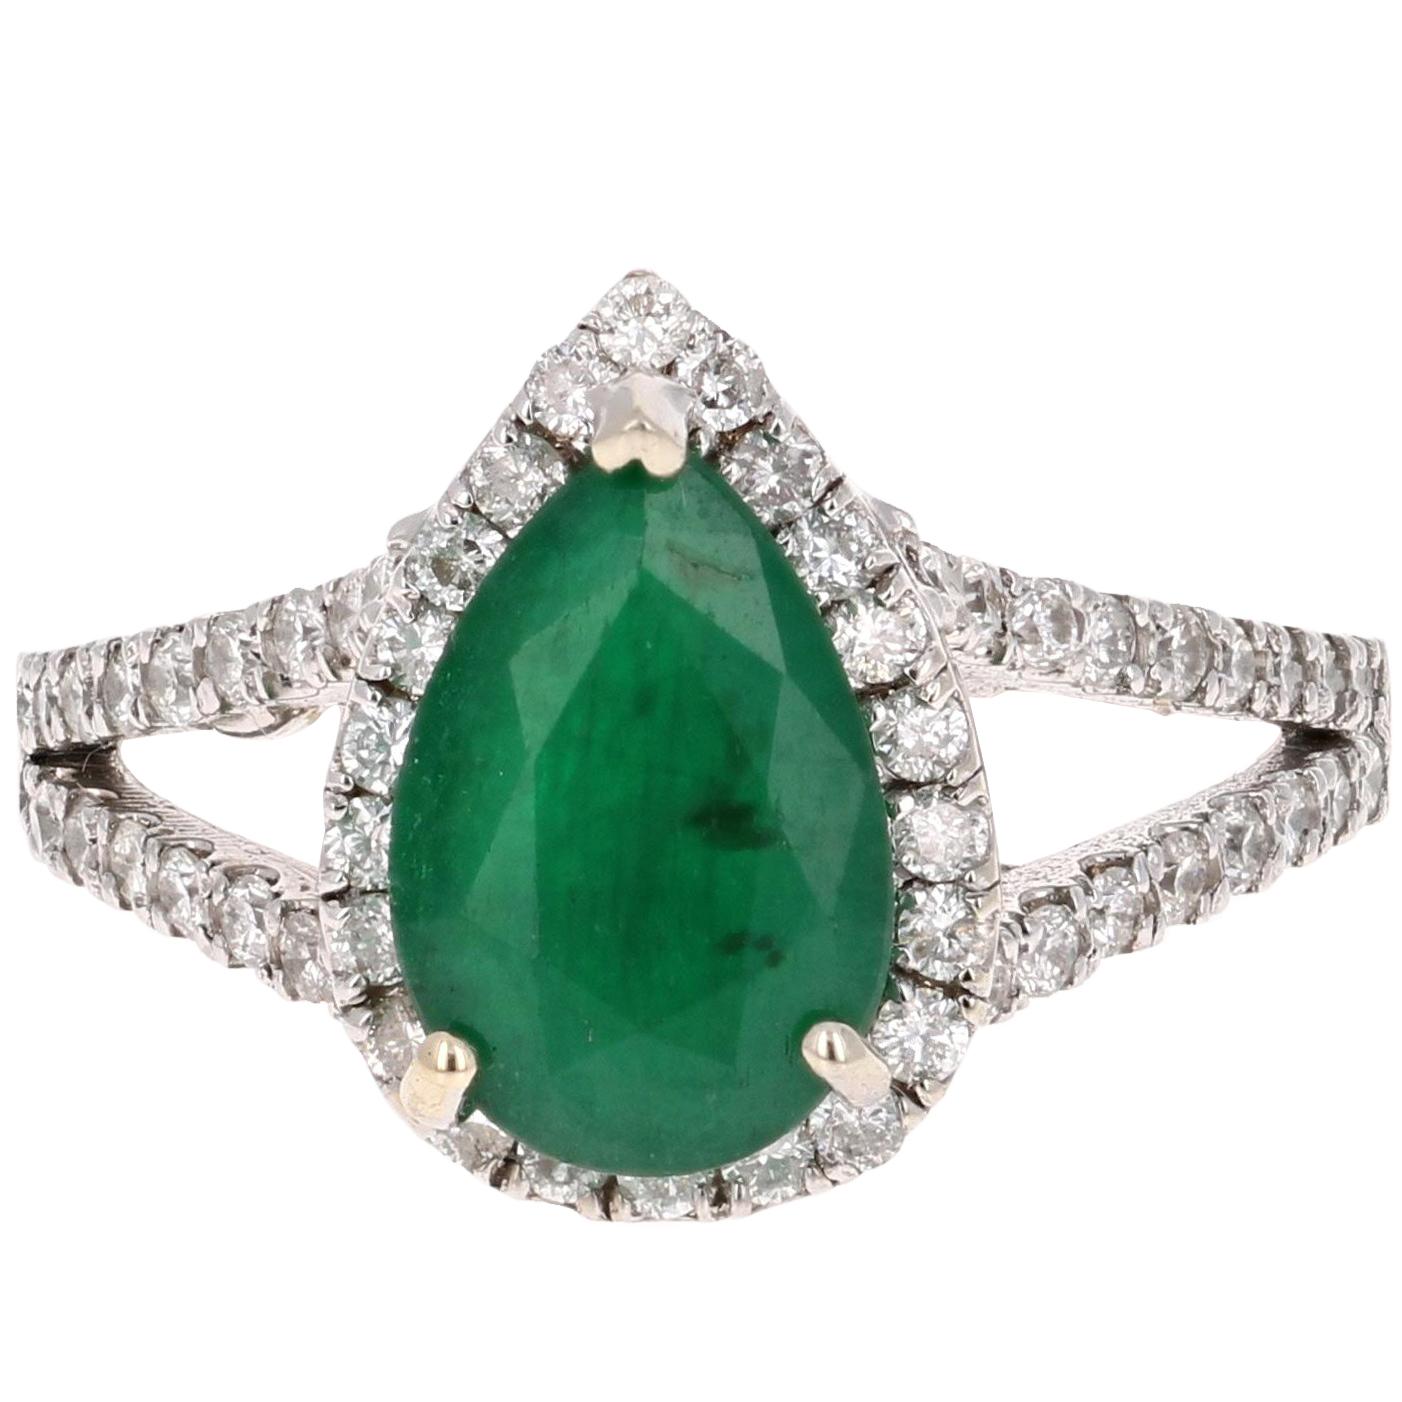 2.84 Carat Pear Cut Emerald Diamond Halo Engagement Ring